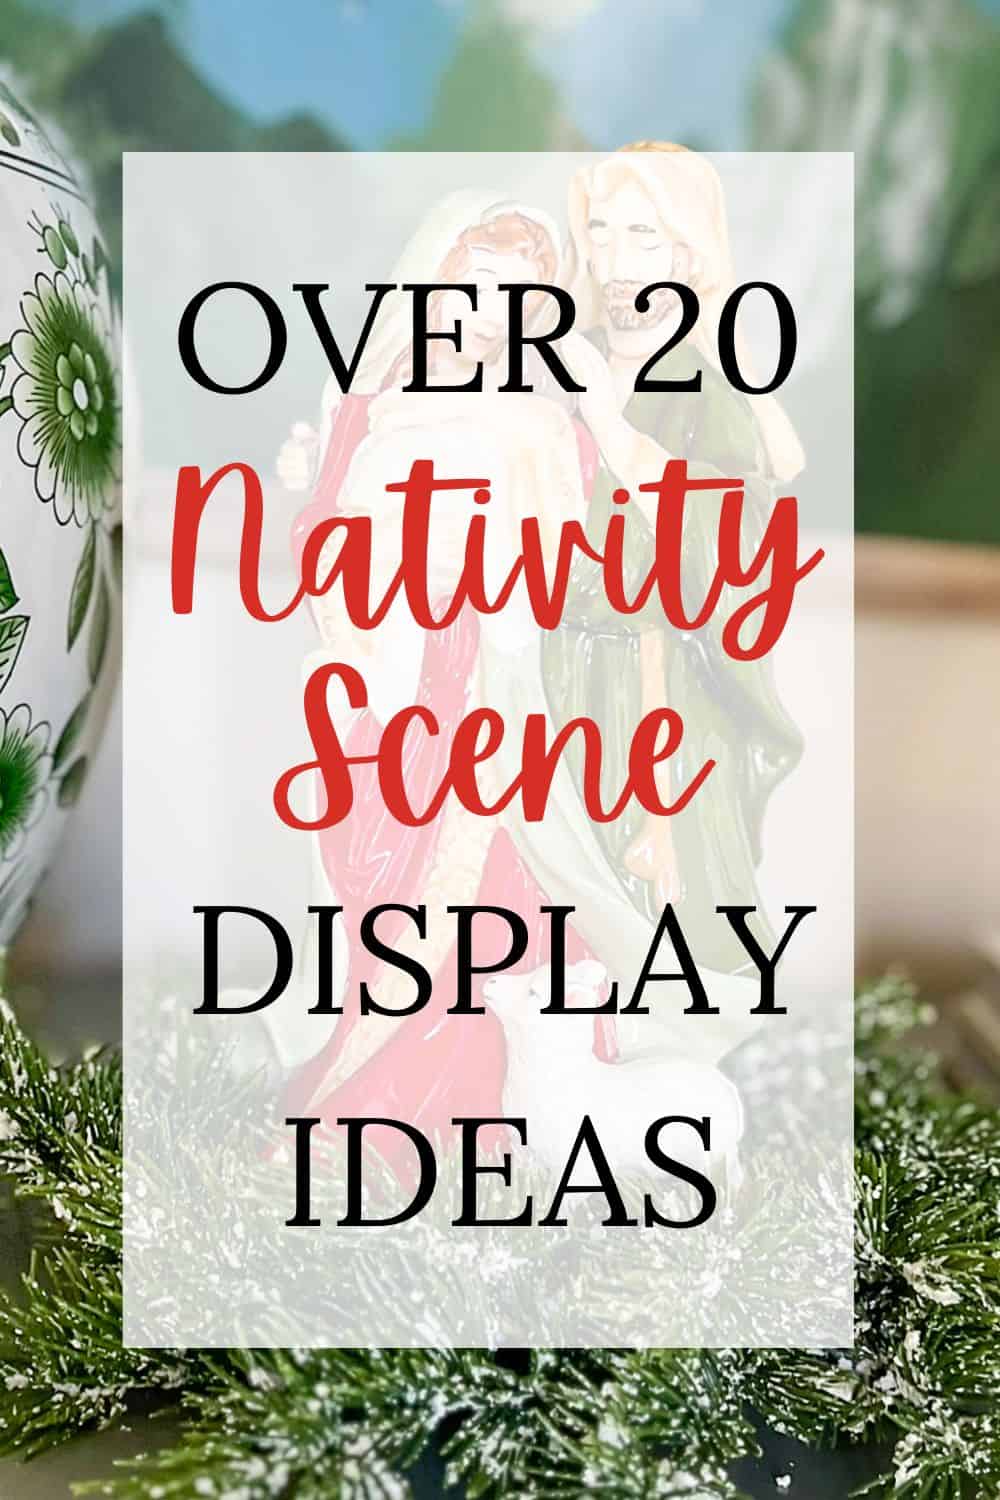 nativity scene display ideas Pinterest graphic